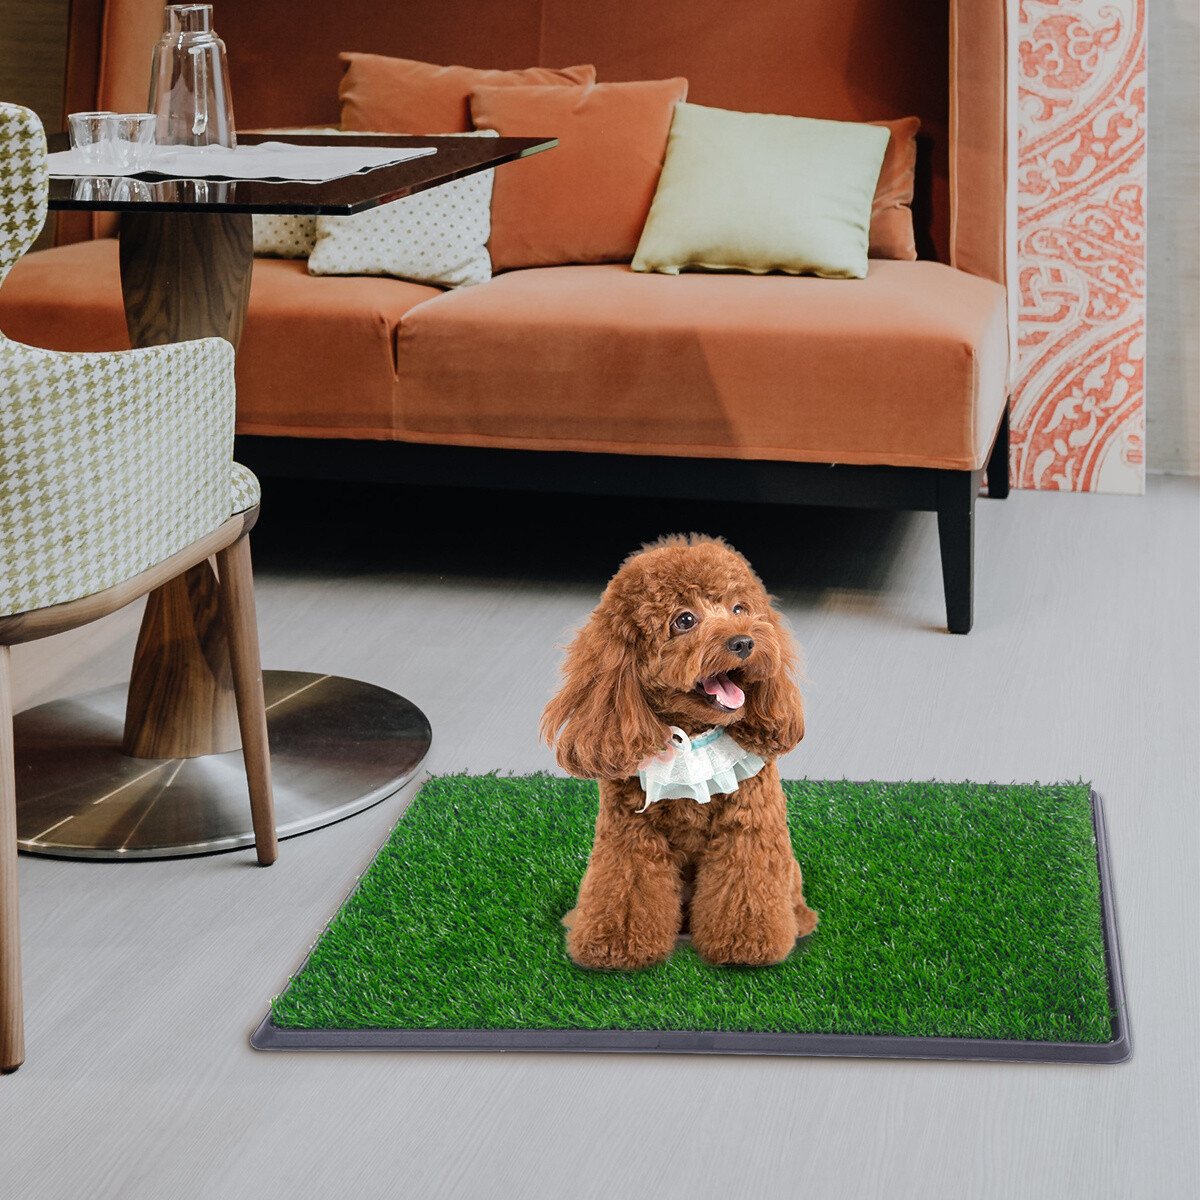 Puppy Dog Pet Potty Training Grass Pad Mat - Indoor Housebreaking Solution